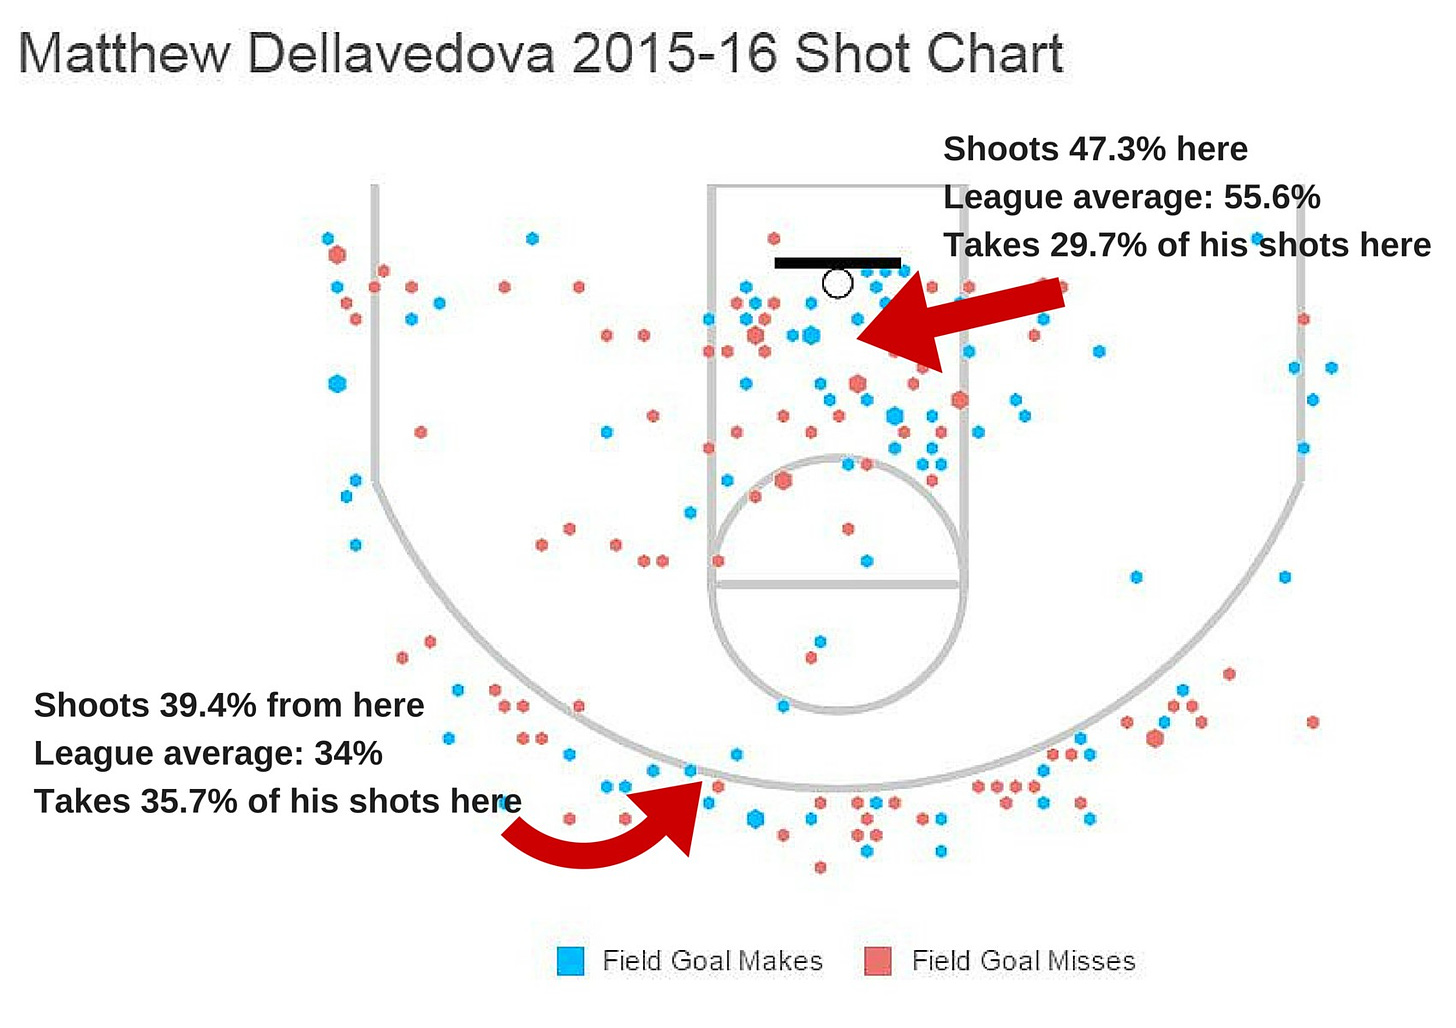 Delly shot chart